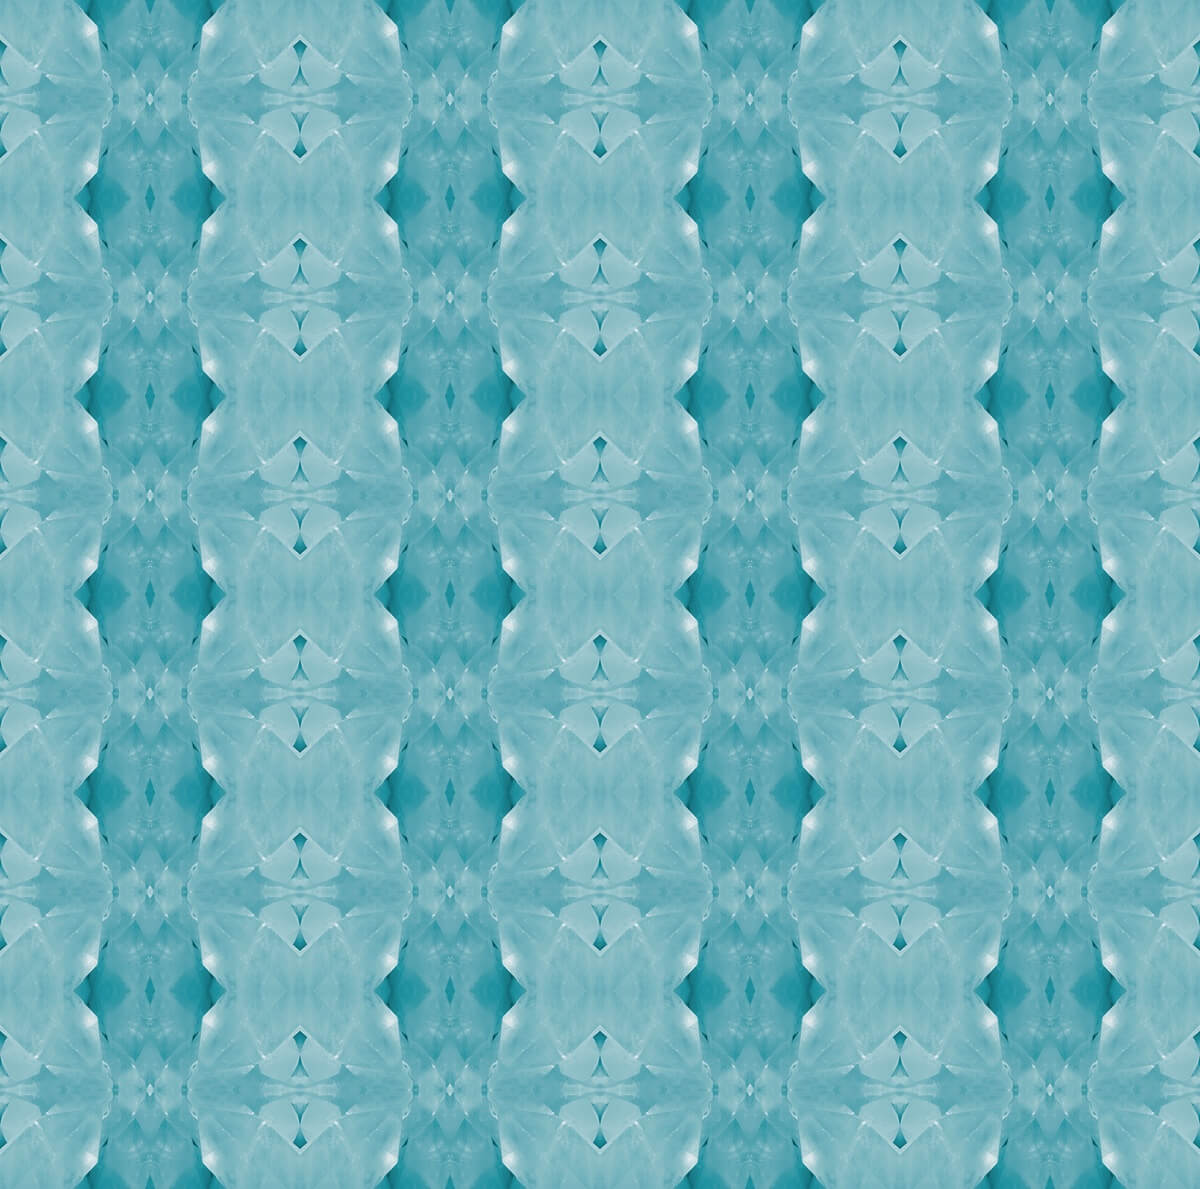 Ghost Quartz pattern in blue